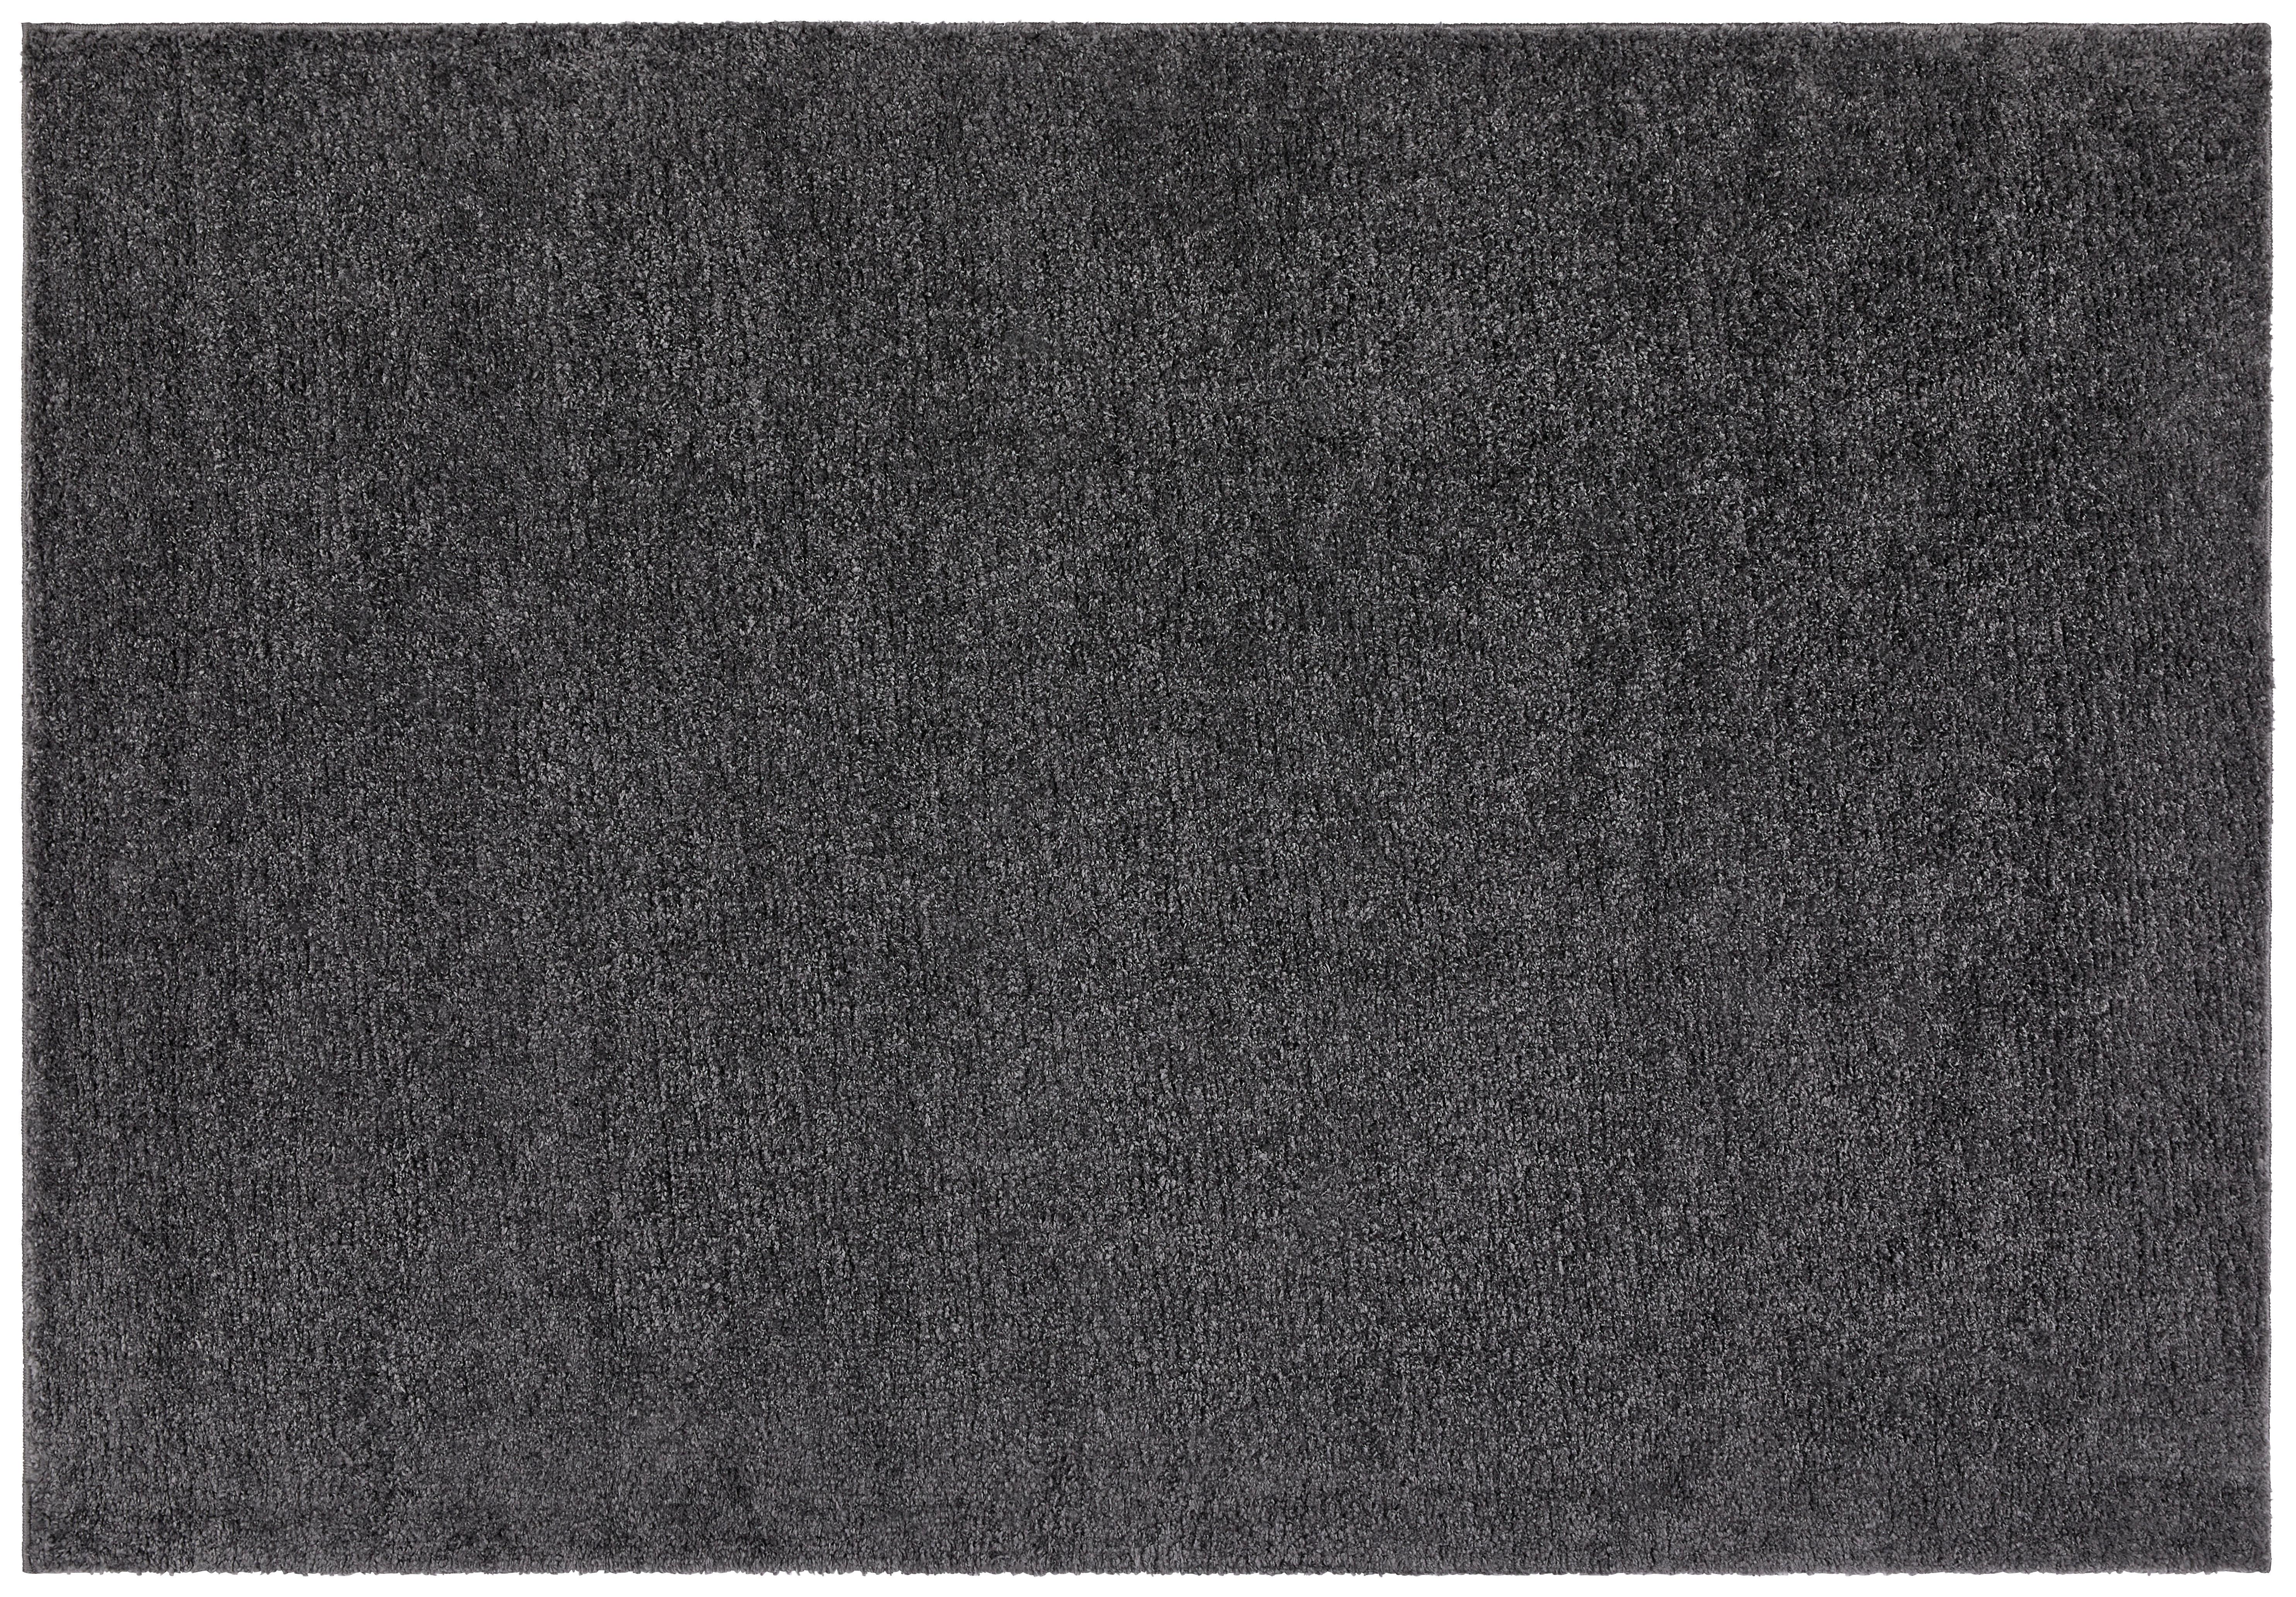 Hochflor Teppich Anthrazit Steve 60x100 cm - Anthrazit, Basics, Textil (60/100cm) - Luca Bessoni